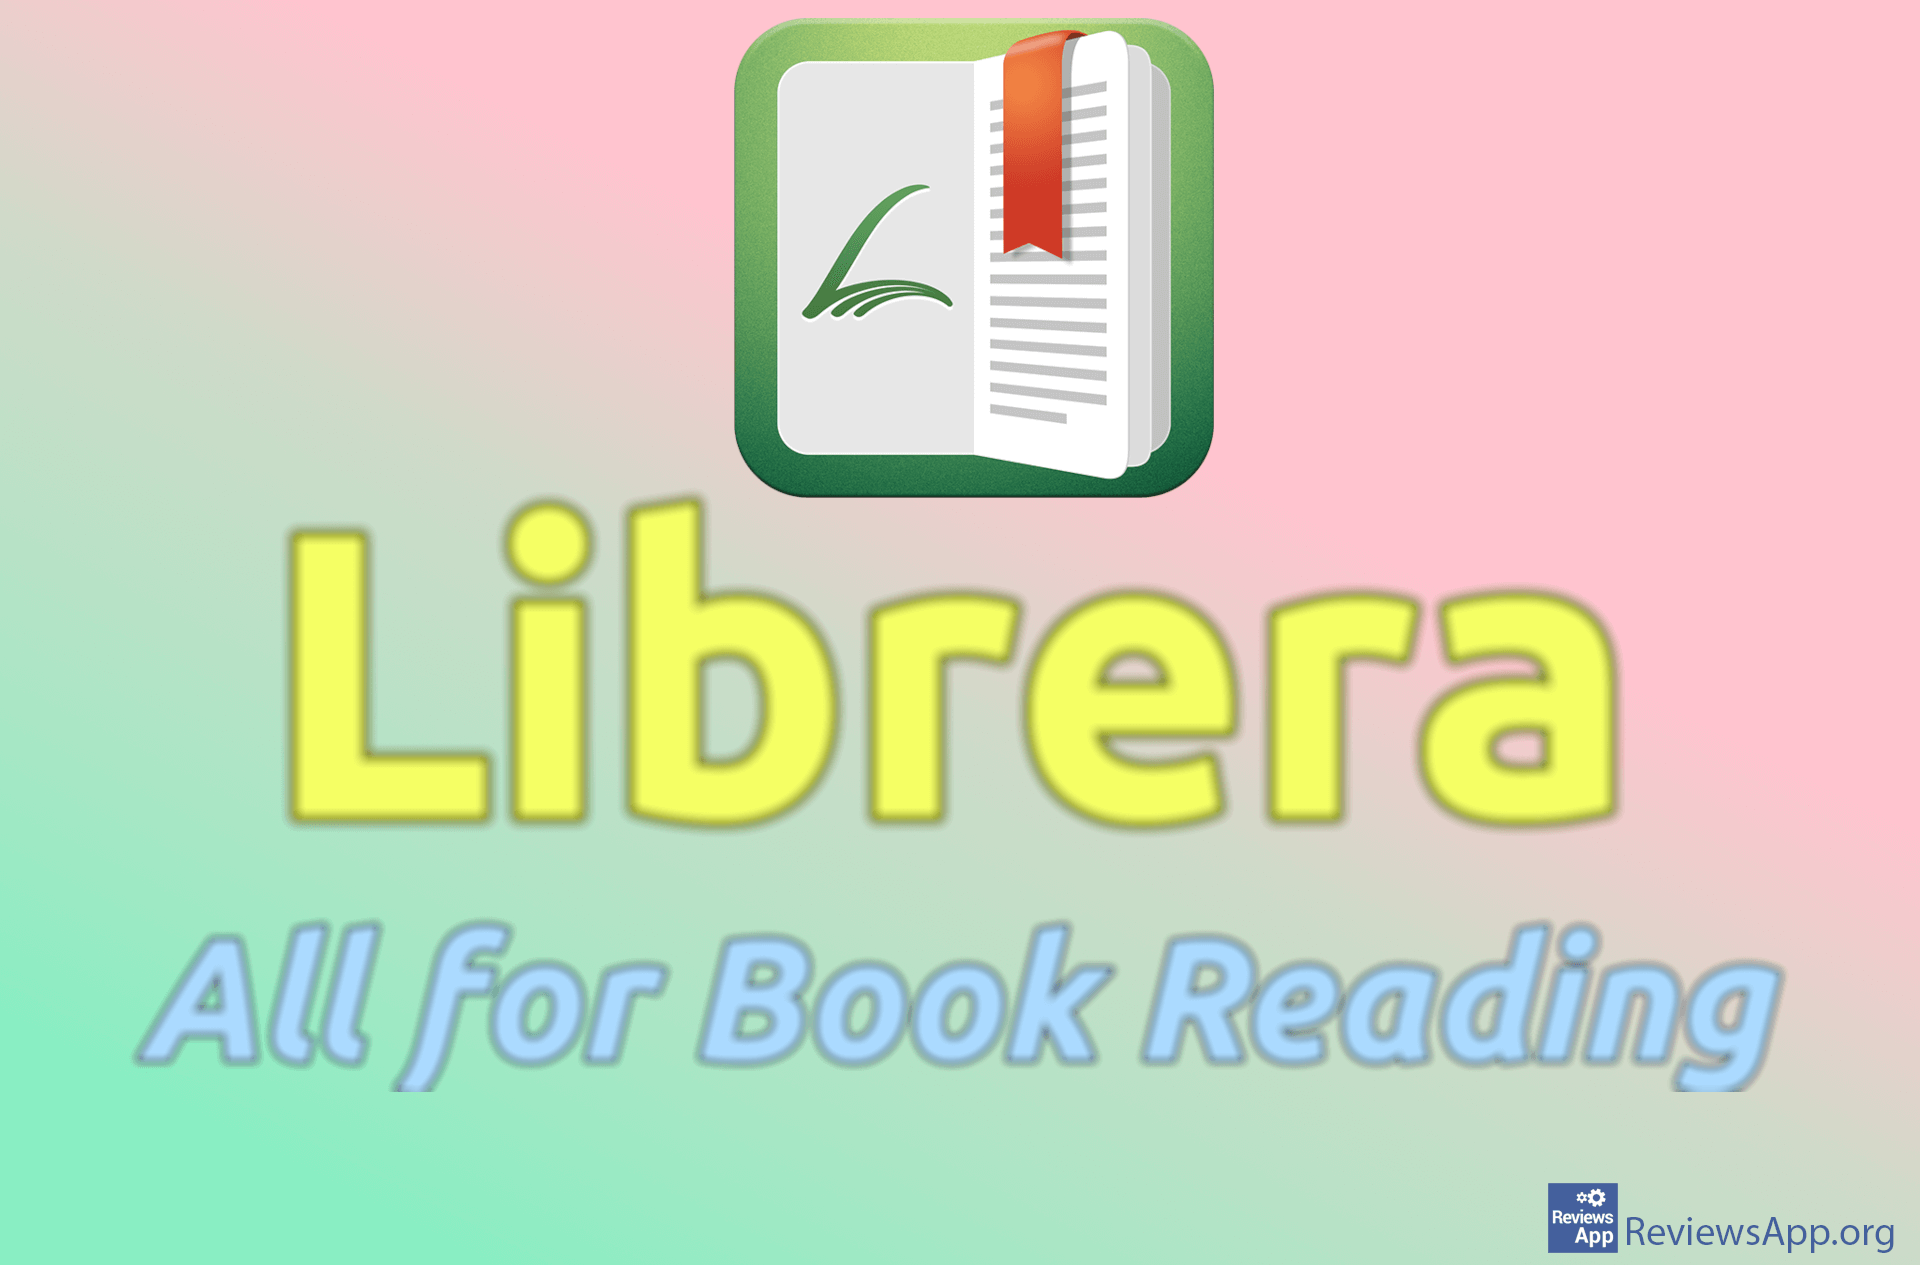 Librera – All for Book Reading